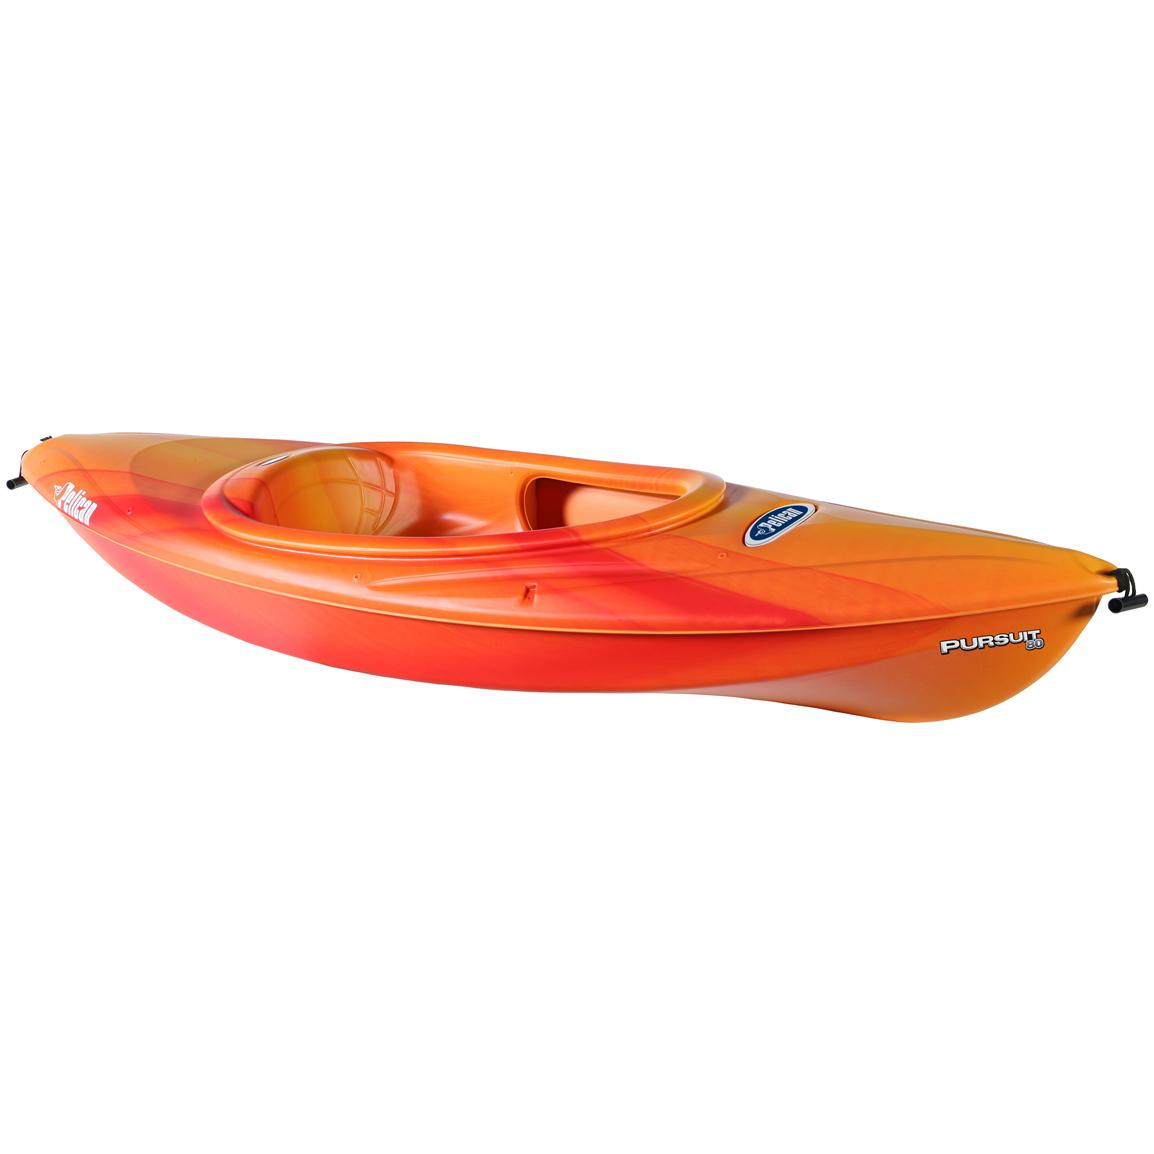 Pelican™ Pursuit 80 Kayak - 220050, Canoes & Kayaks at Sportsman's Guide